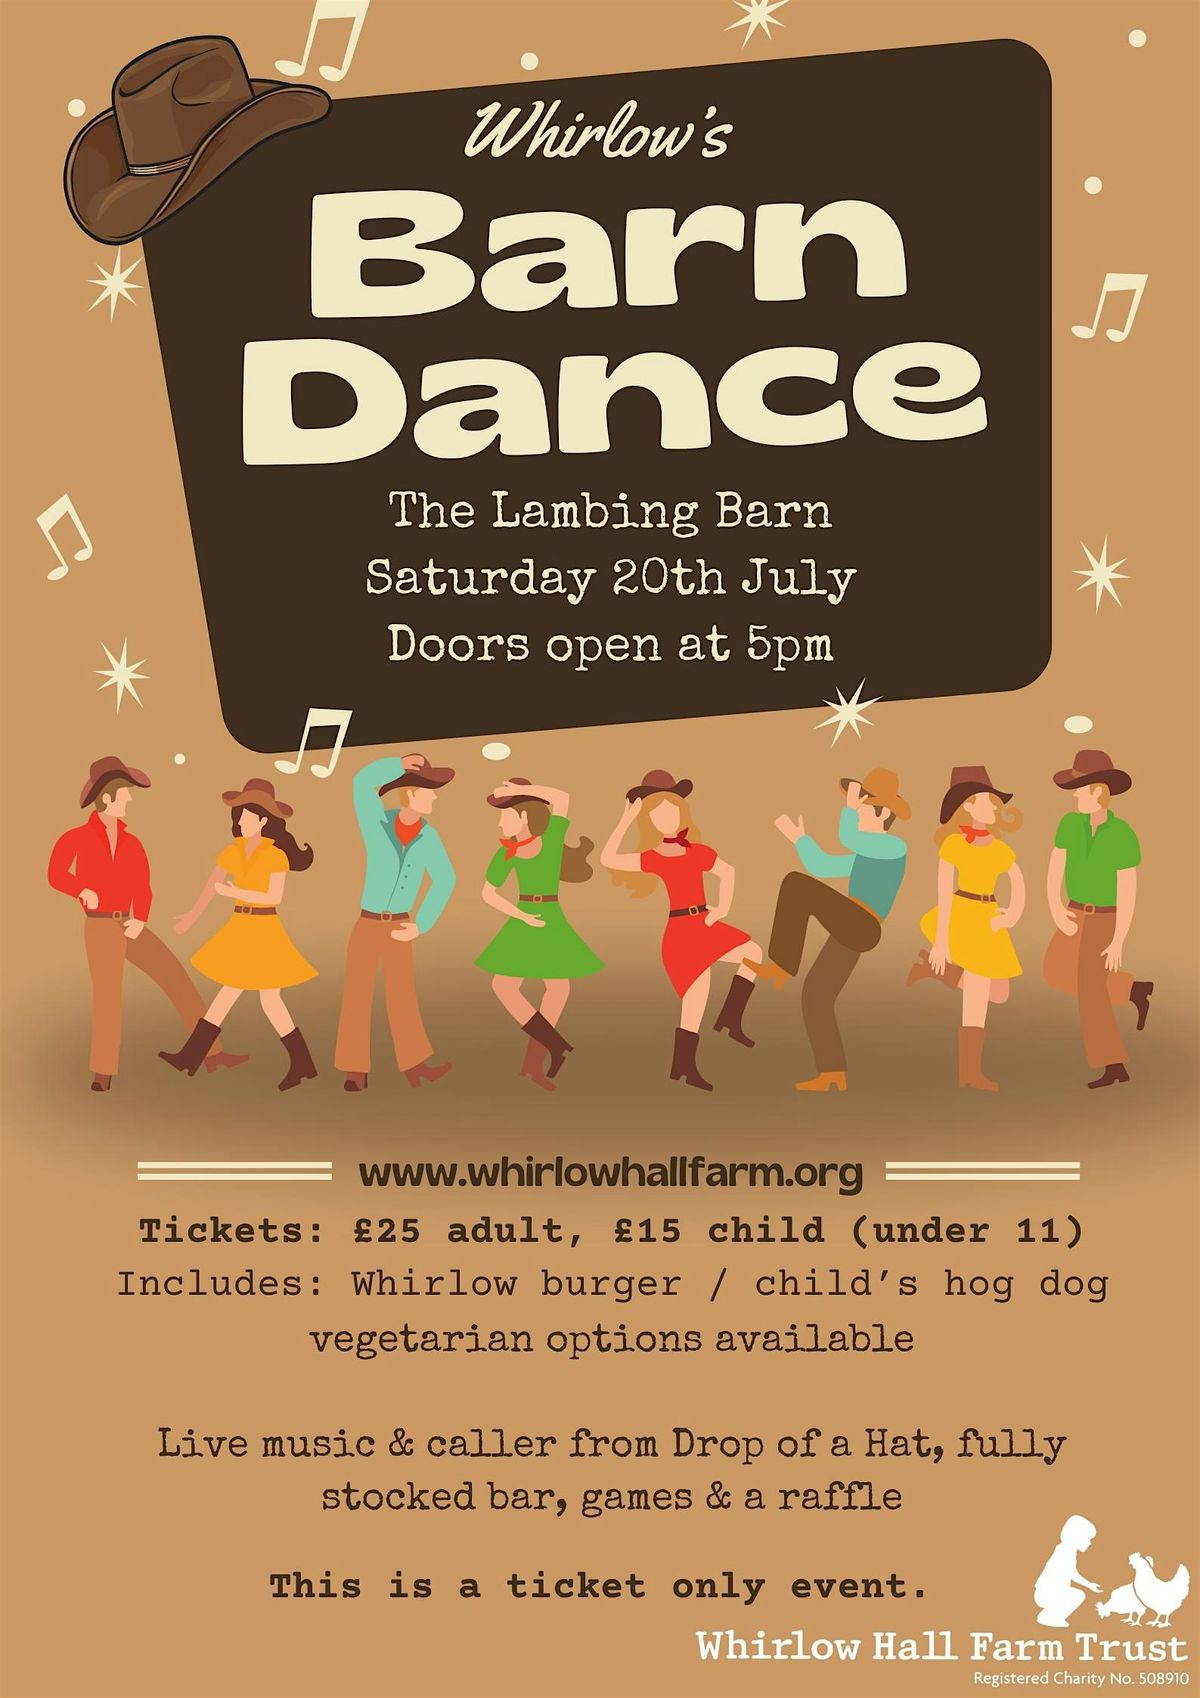 Whirlow's Barn Dance